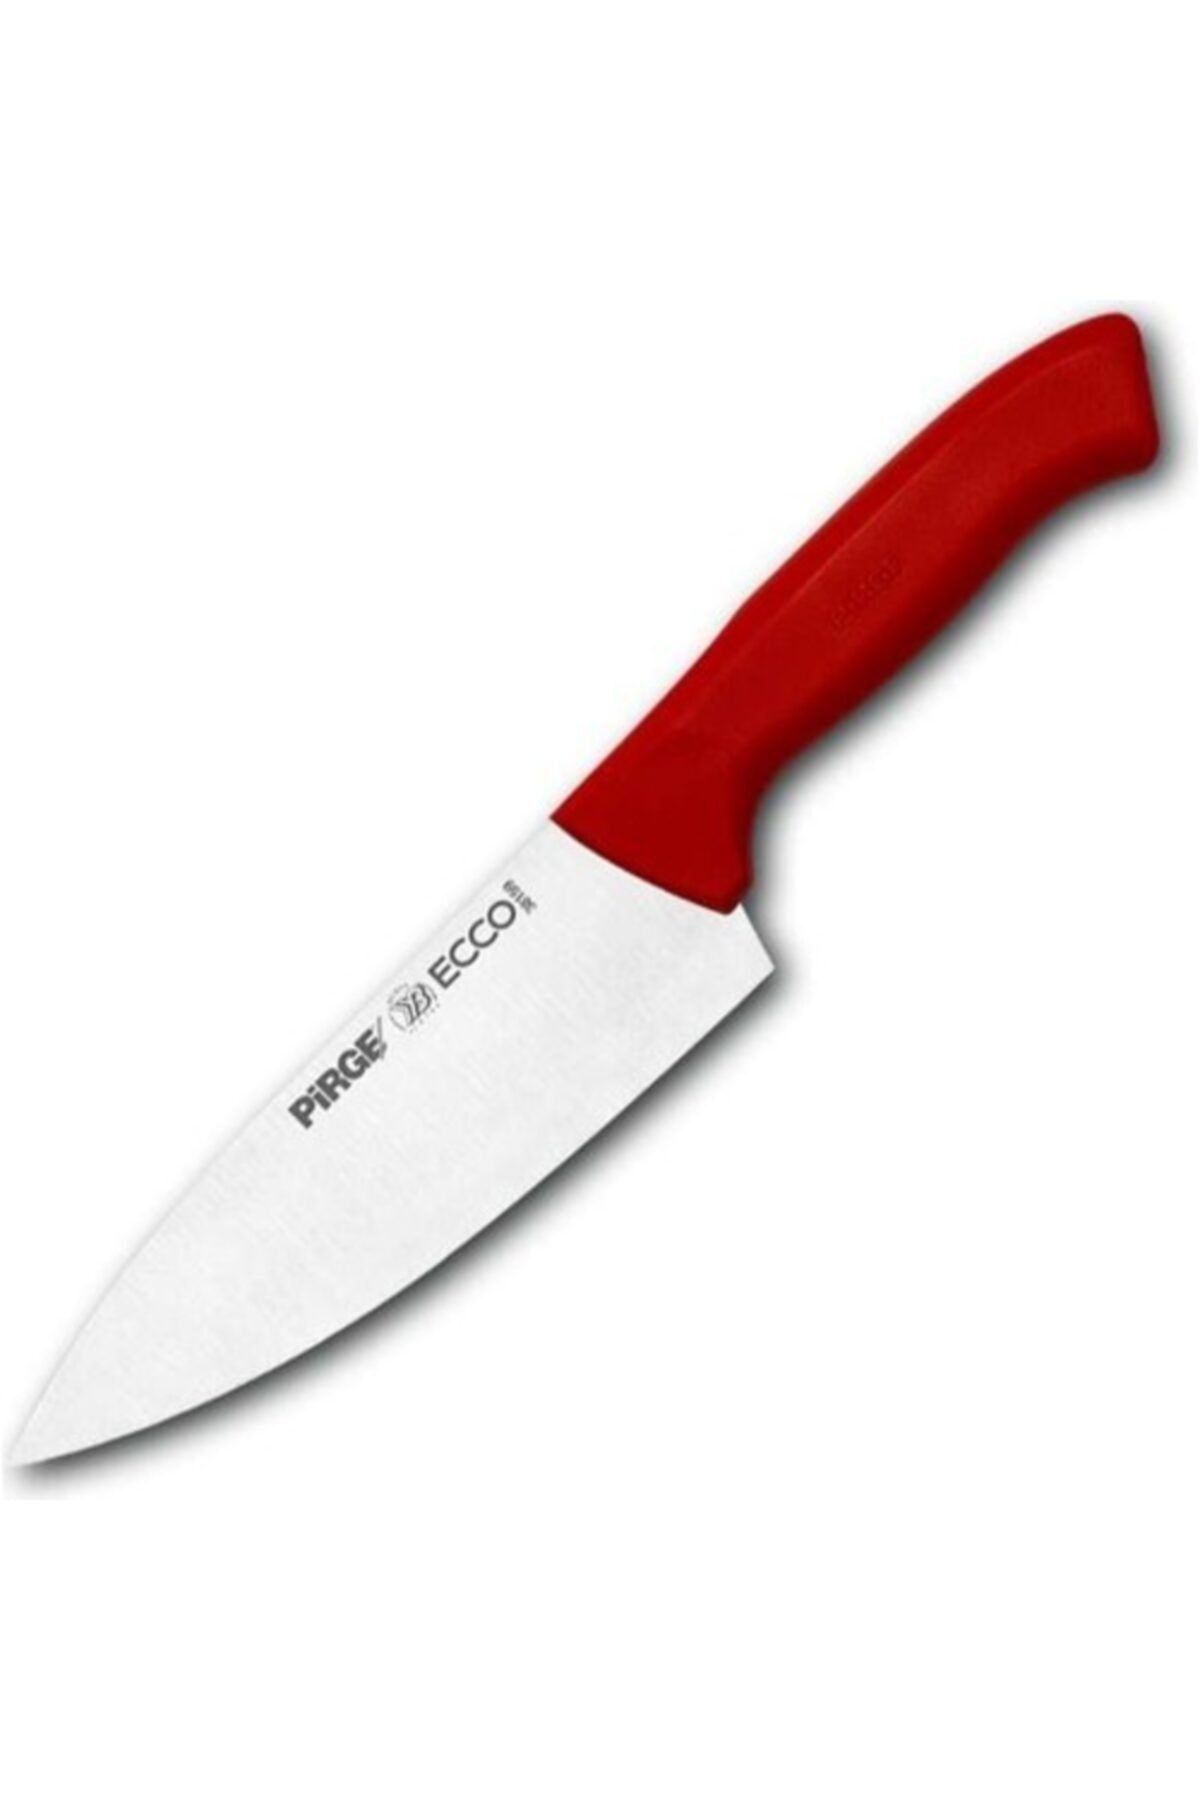 Pirge Ecco Şef Bıçağı 16 Cm Kırmızı 38159